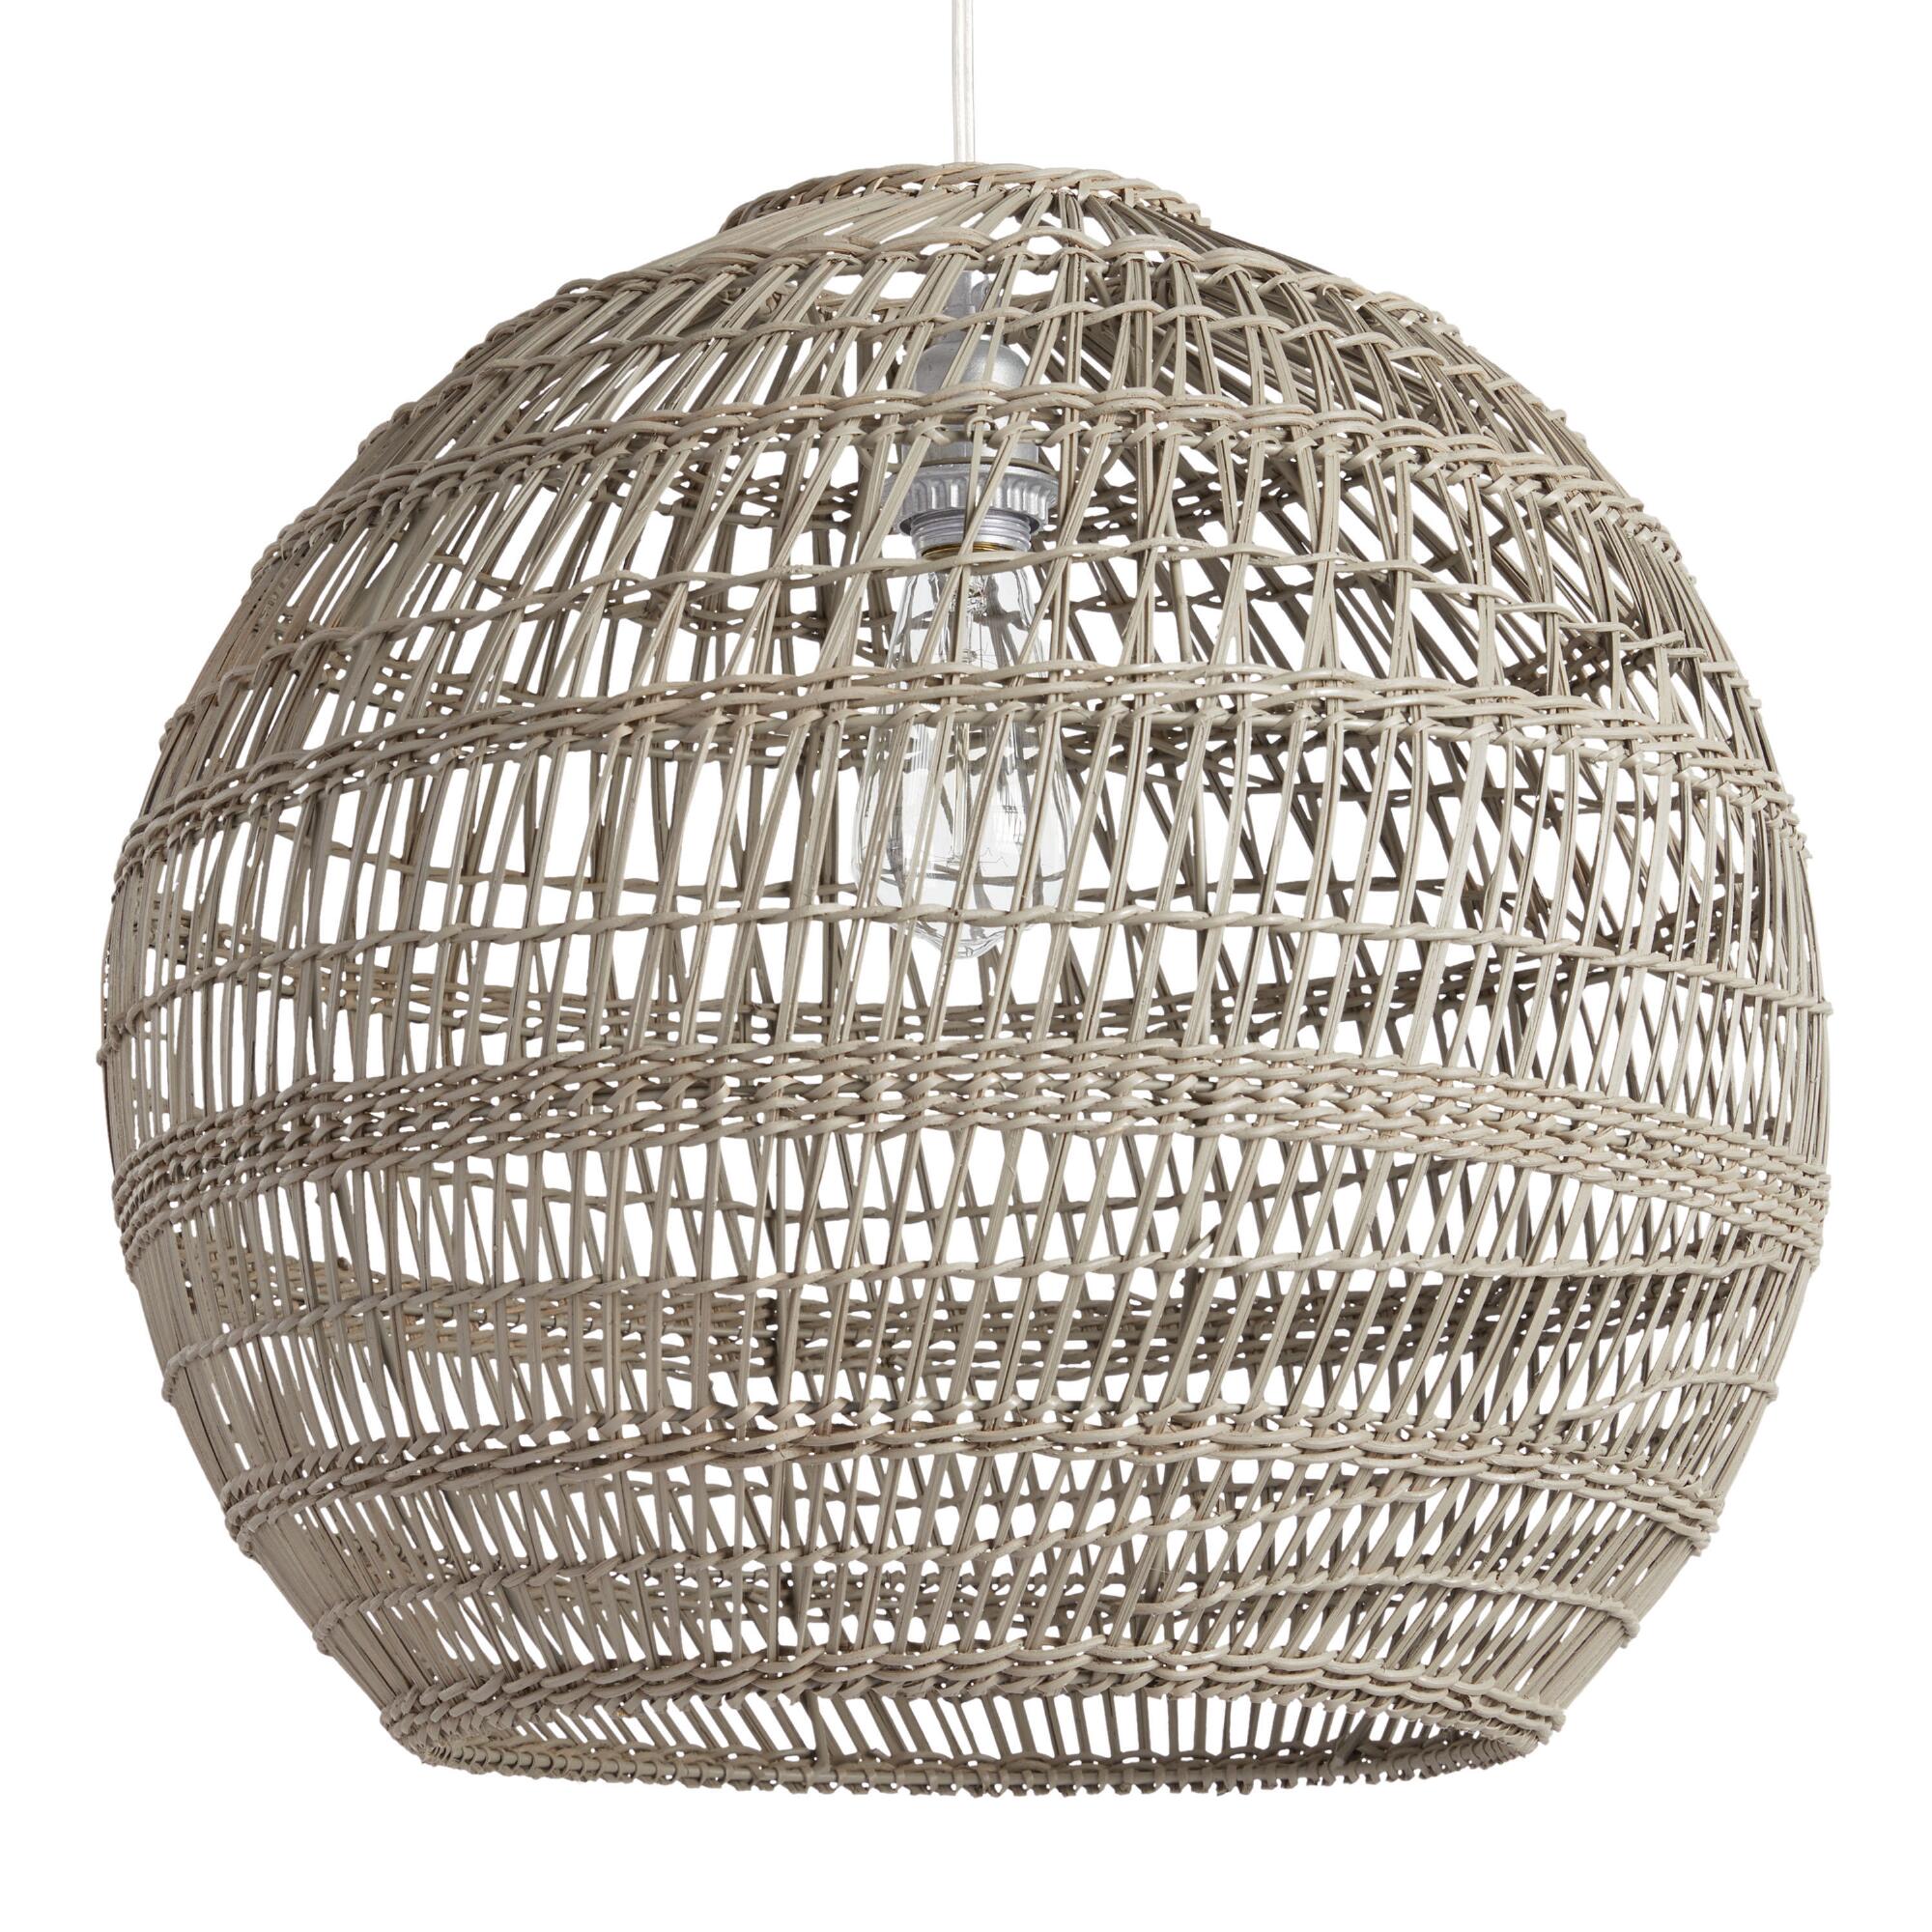 Round Gray Bamboo Basketweave Pendant Shade - Natural Fiber - Large by World Market